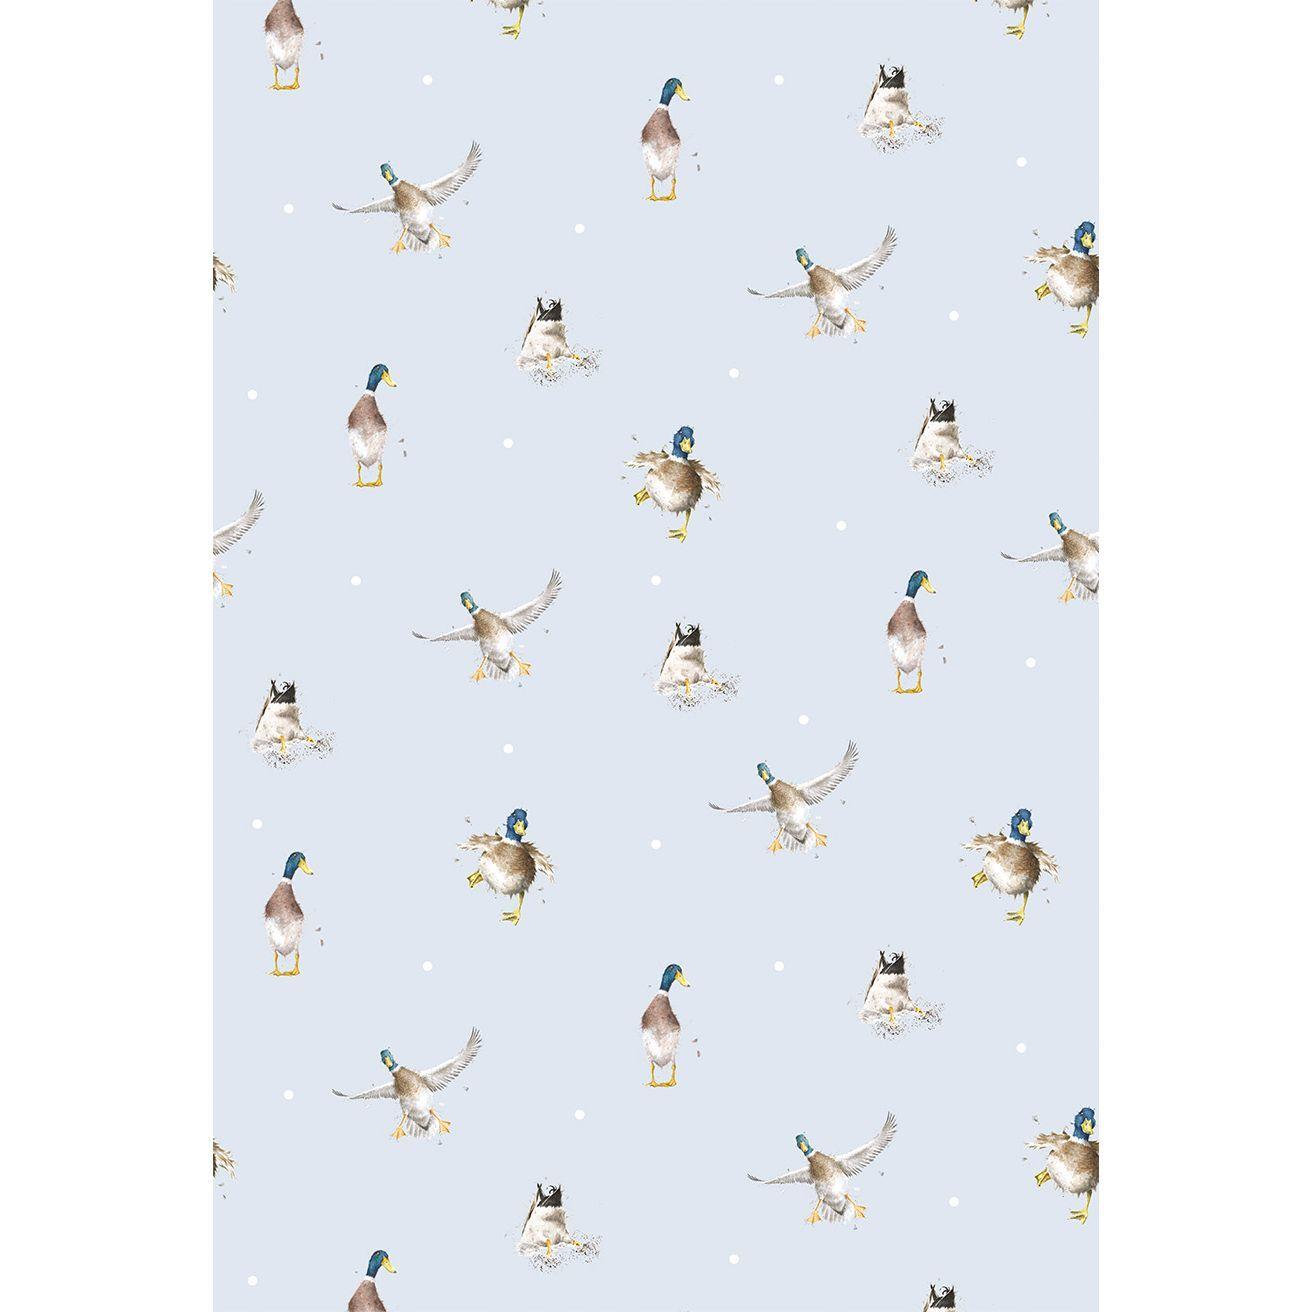 Duck Wallpaper. Wrendale Designs